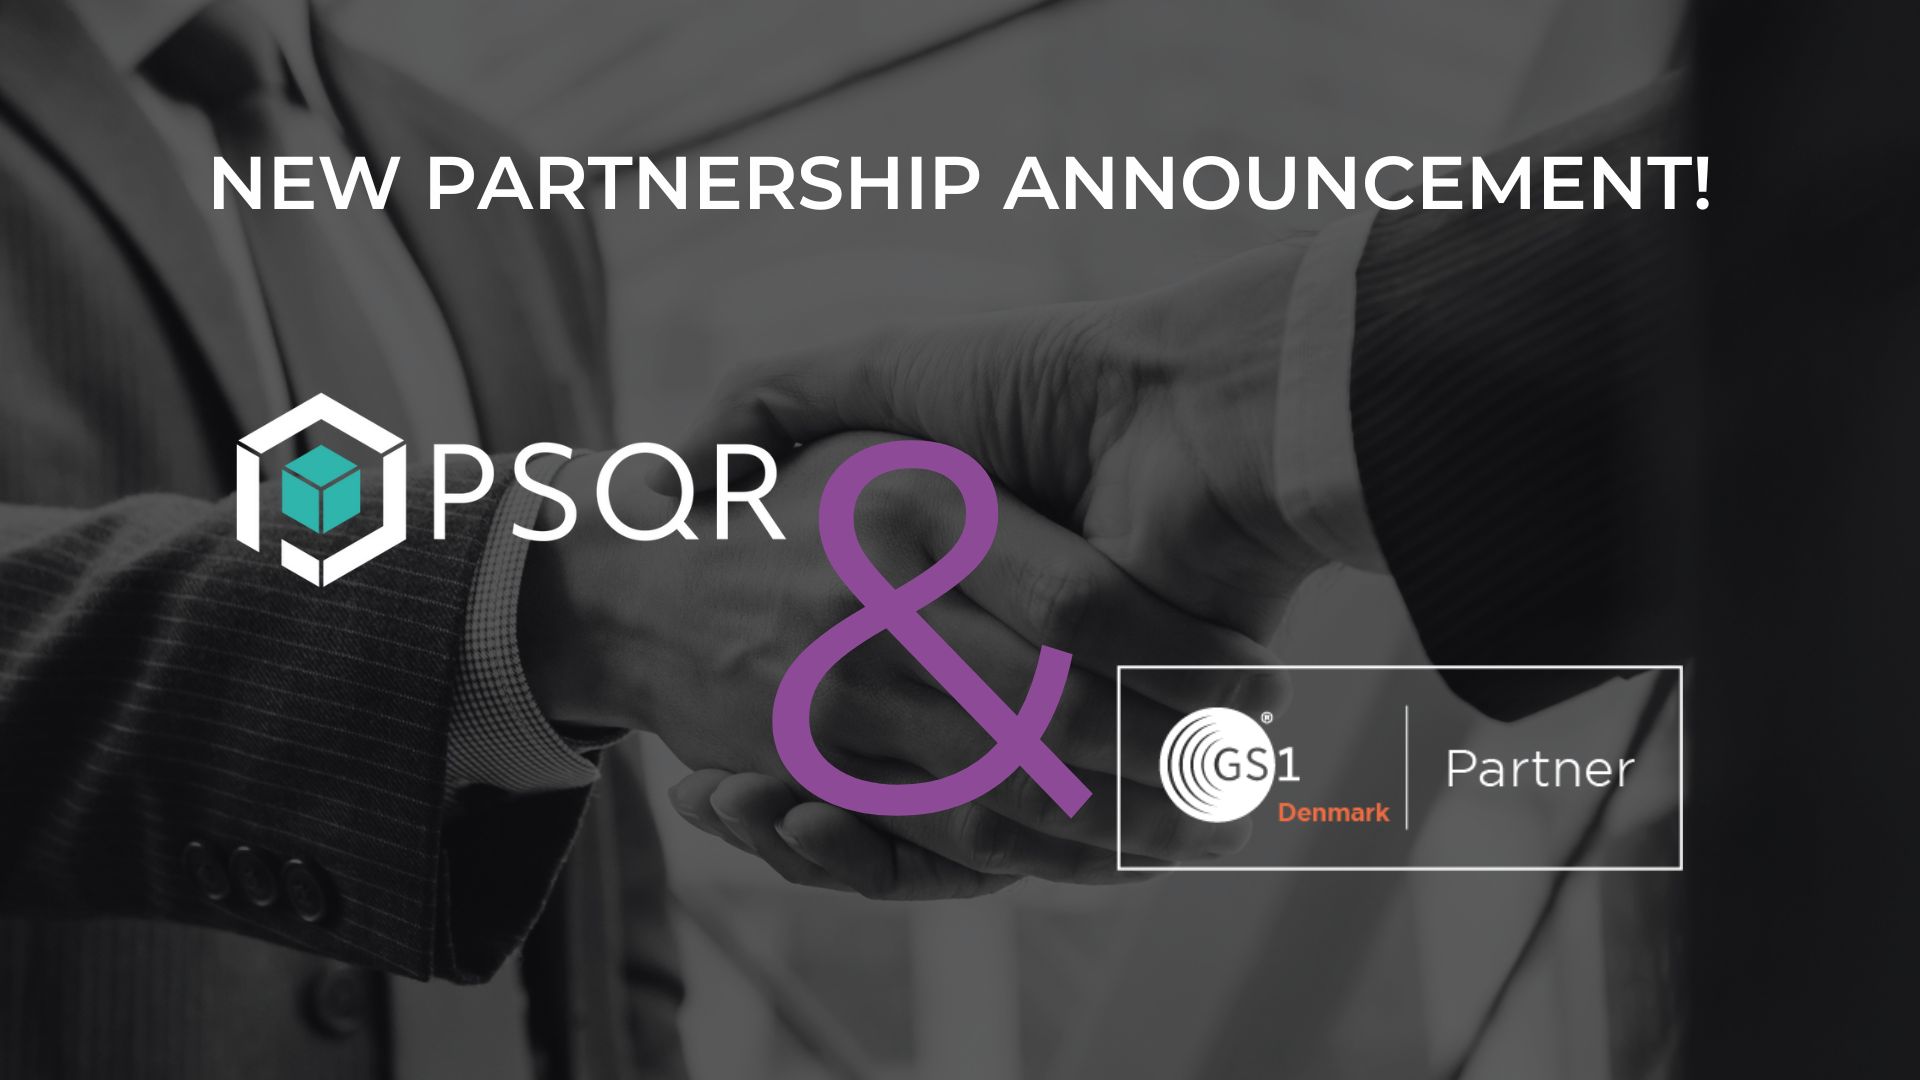 PSQR and GS1 Denmark announce partnership